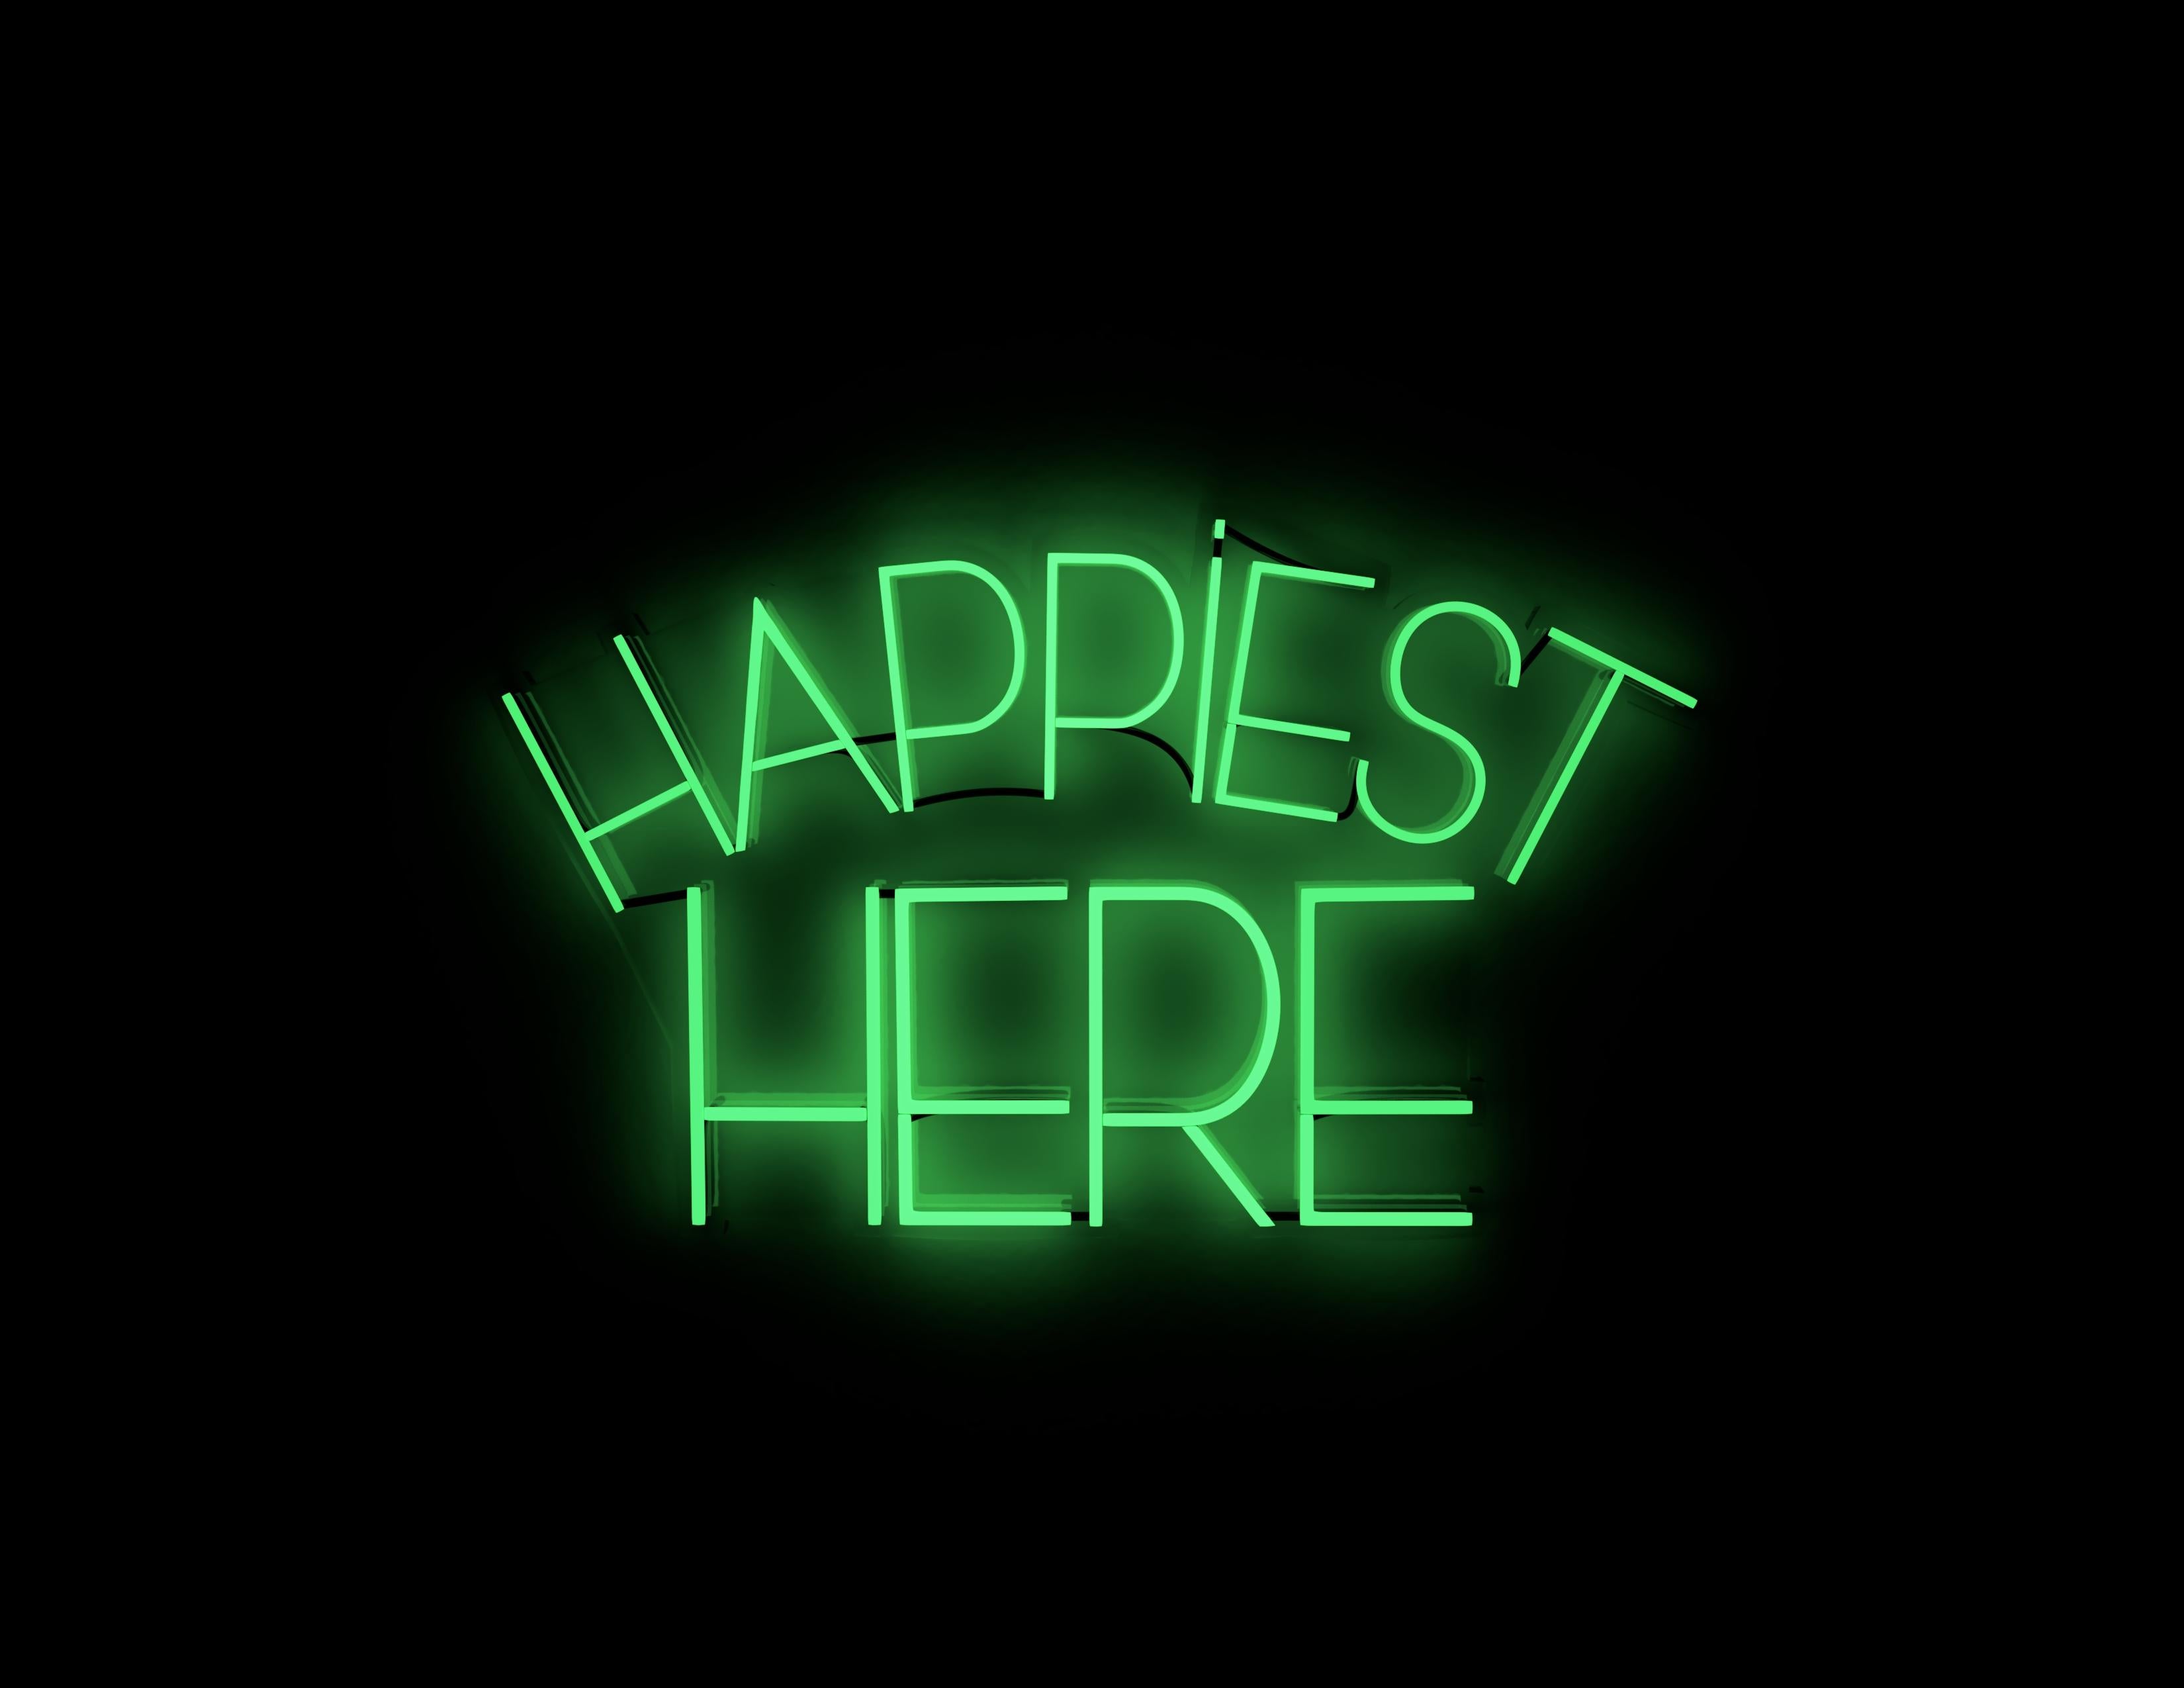 Happiest here - neon art work - Mixed Media Art by Mary Jo McGonagle